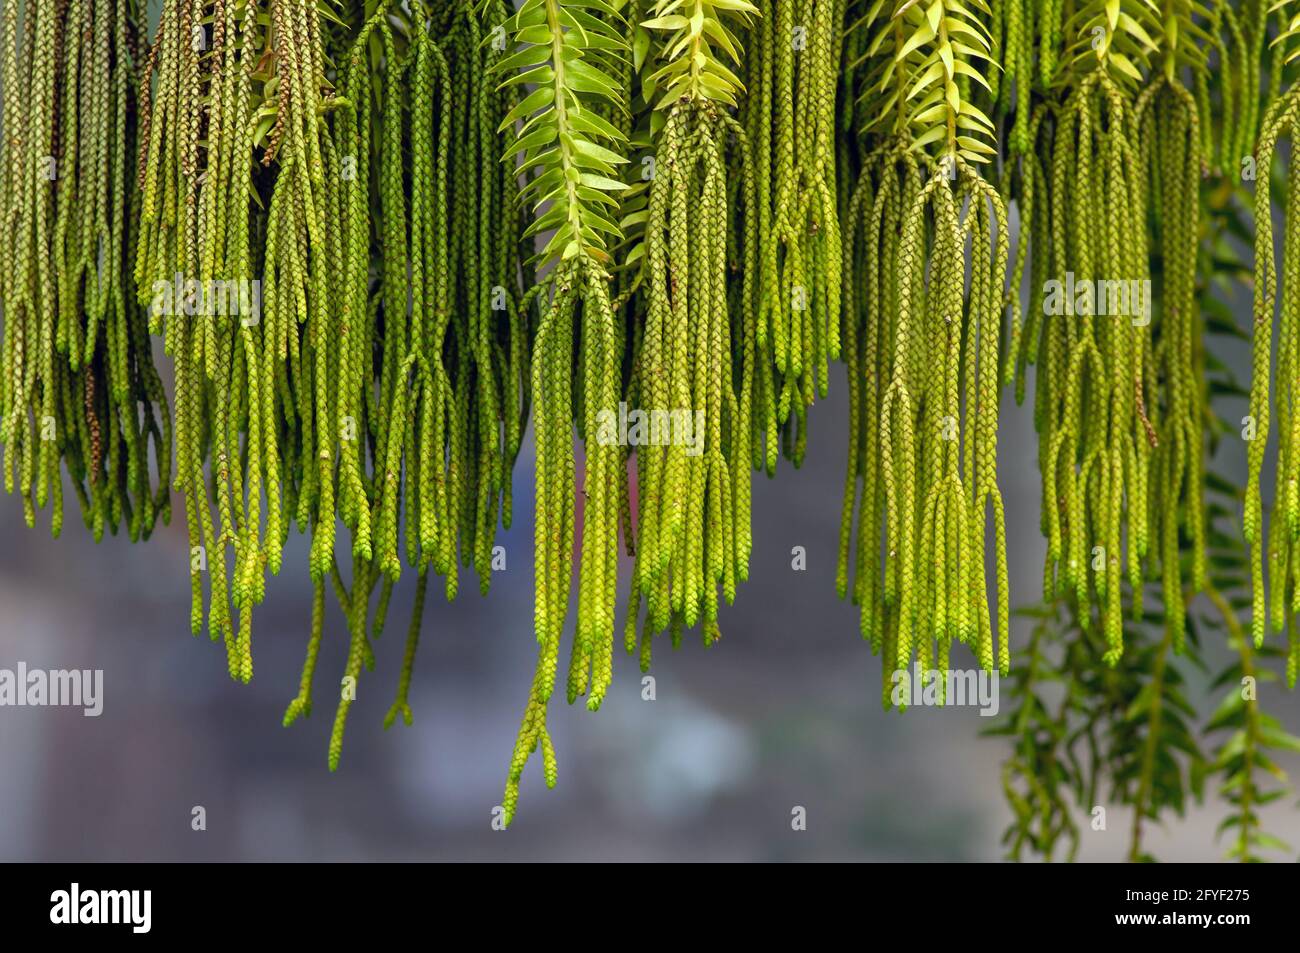 Kumpai Rantai (Phlegmariurus phlegmaria or Huperzia phlegmaria) green plant, a rare species commonly known as coarse tassel fern and common tassel fer Stock Photo